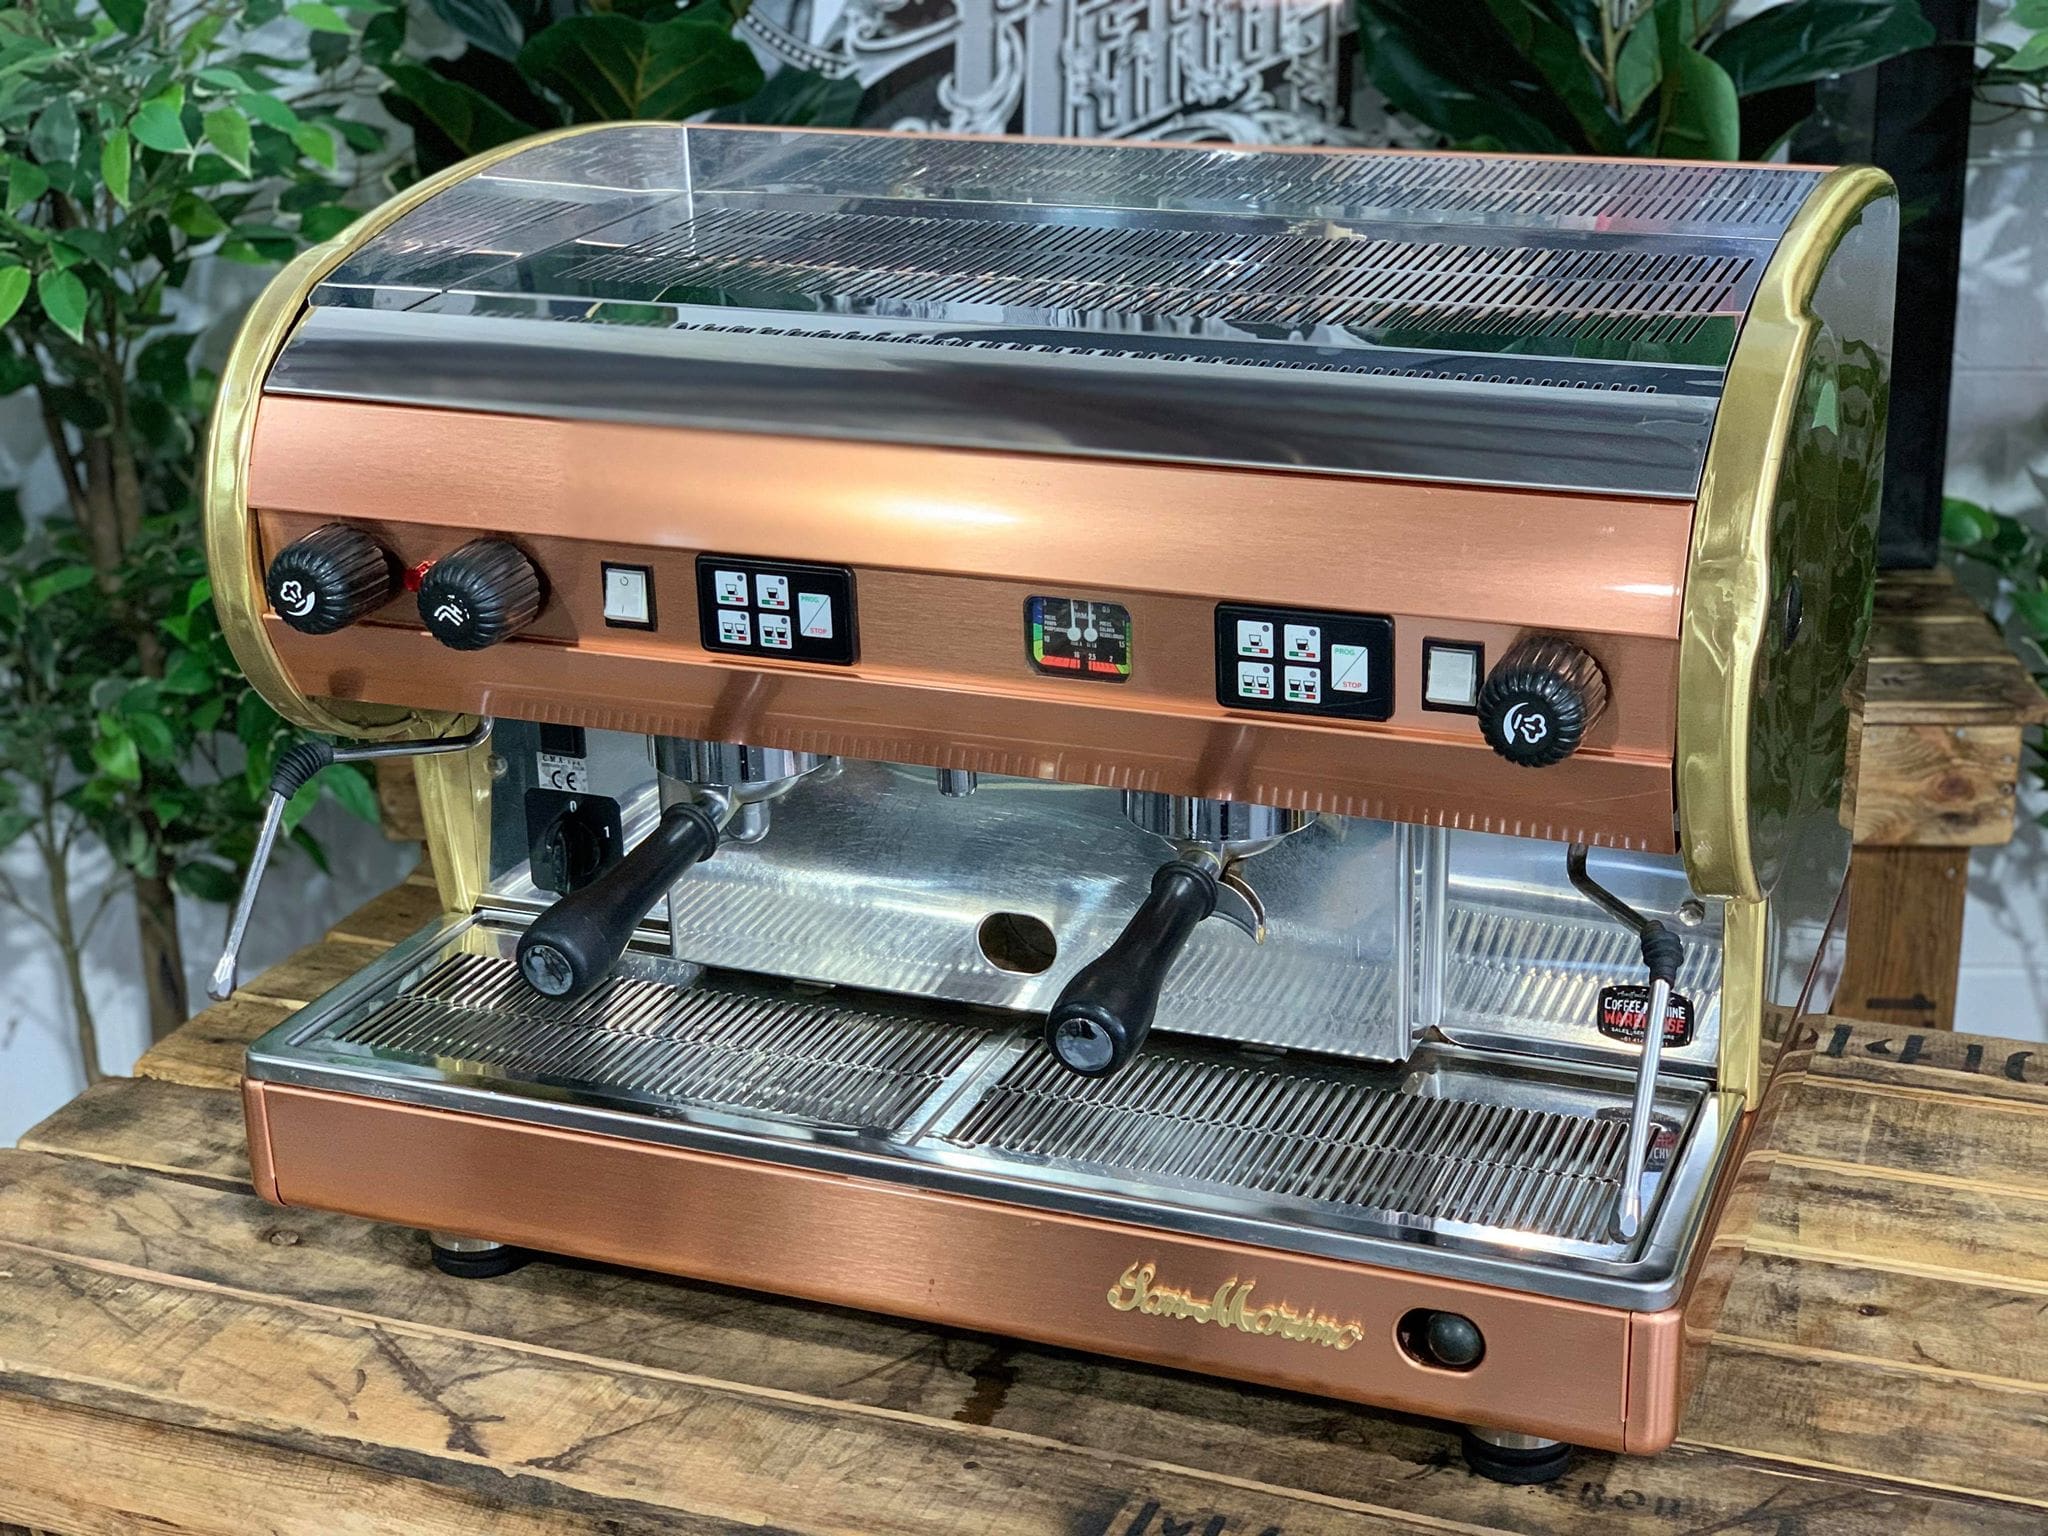 San Marino Lisa - 2 Group EE Commercial Espresso Machine